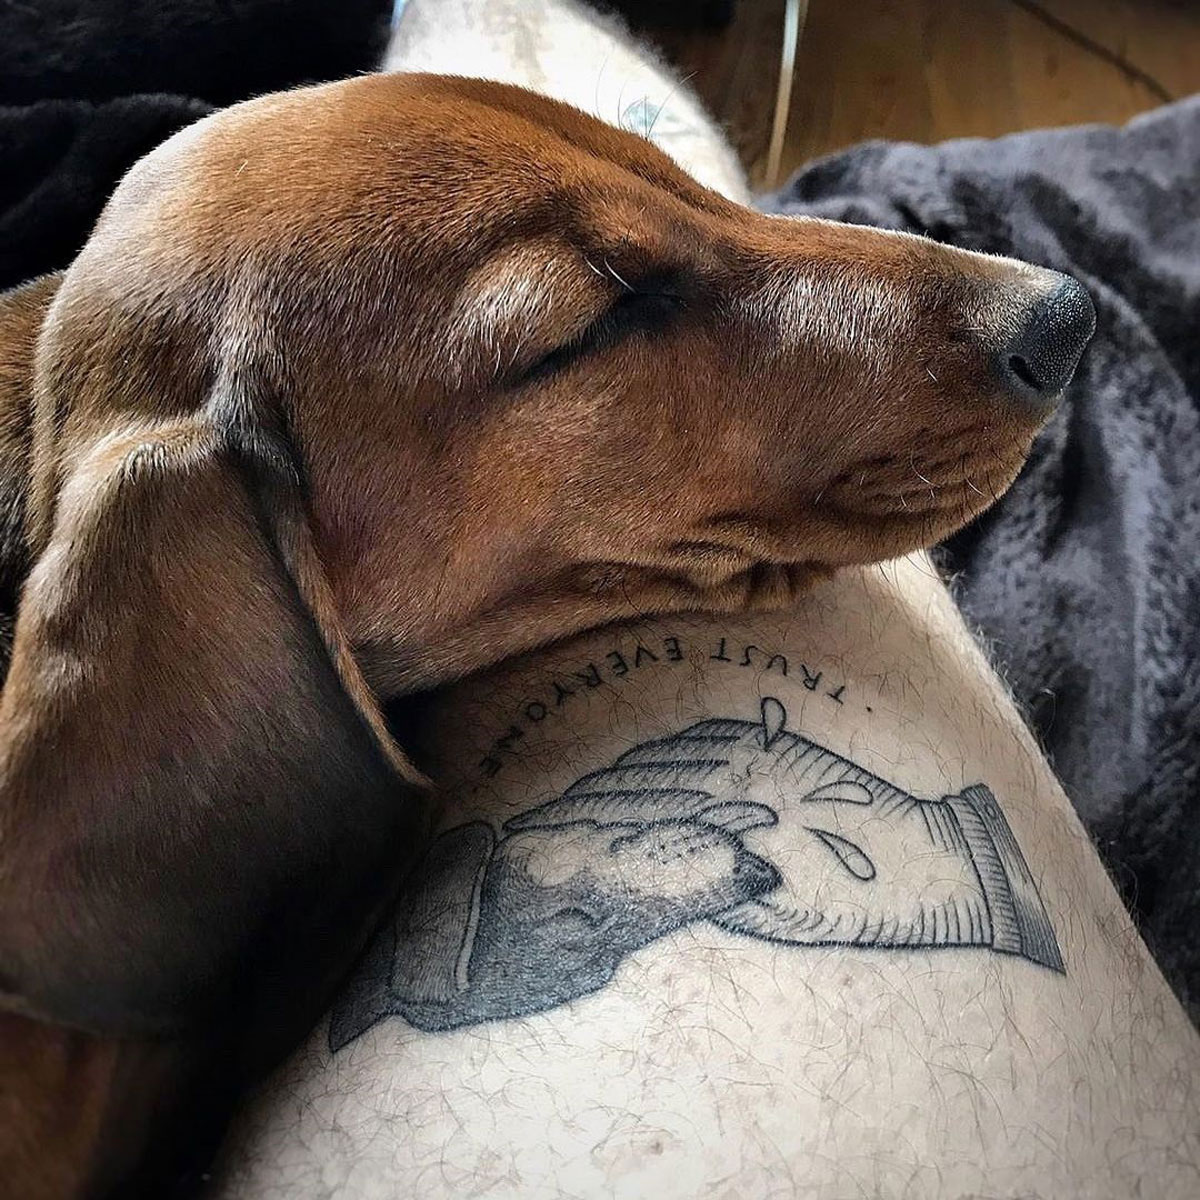 The tattoo inspiration dog